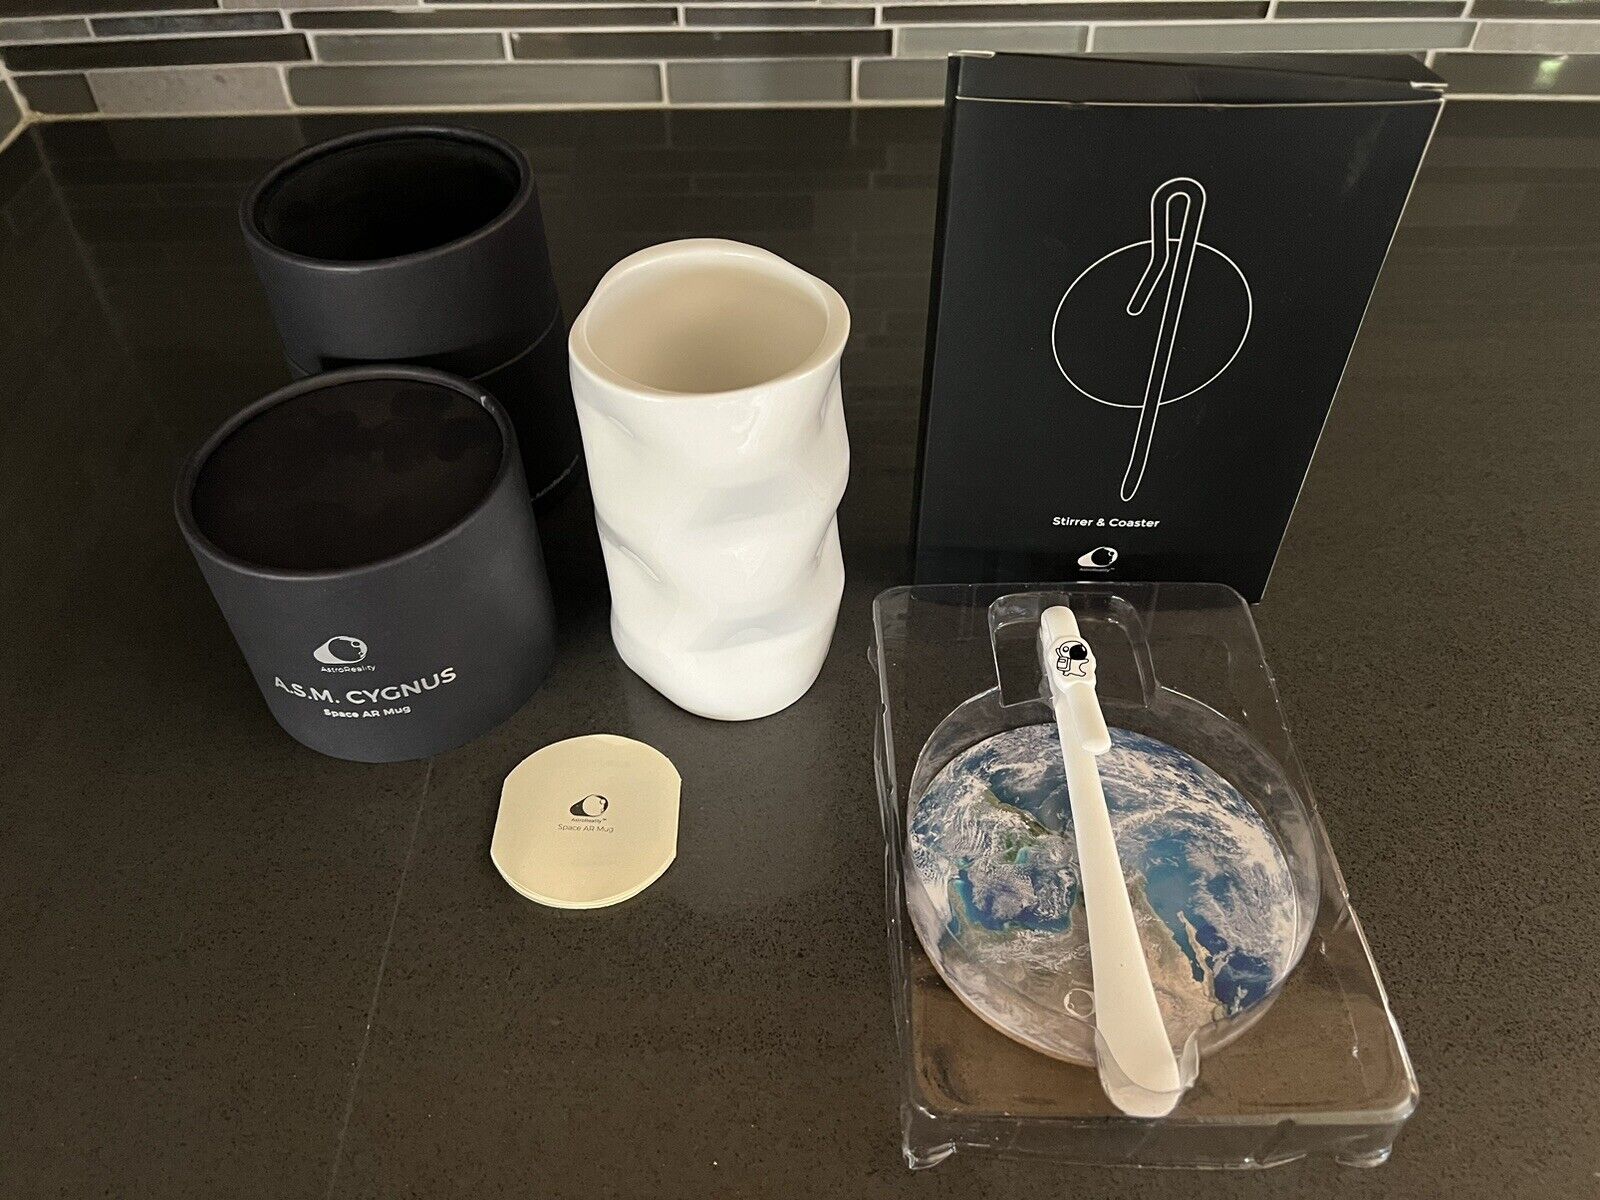 Astroreality Space AR Mug Cup A.S.M. Cygnus in Box w/Insert, Stirrer & Coaster